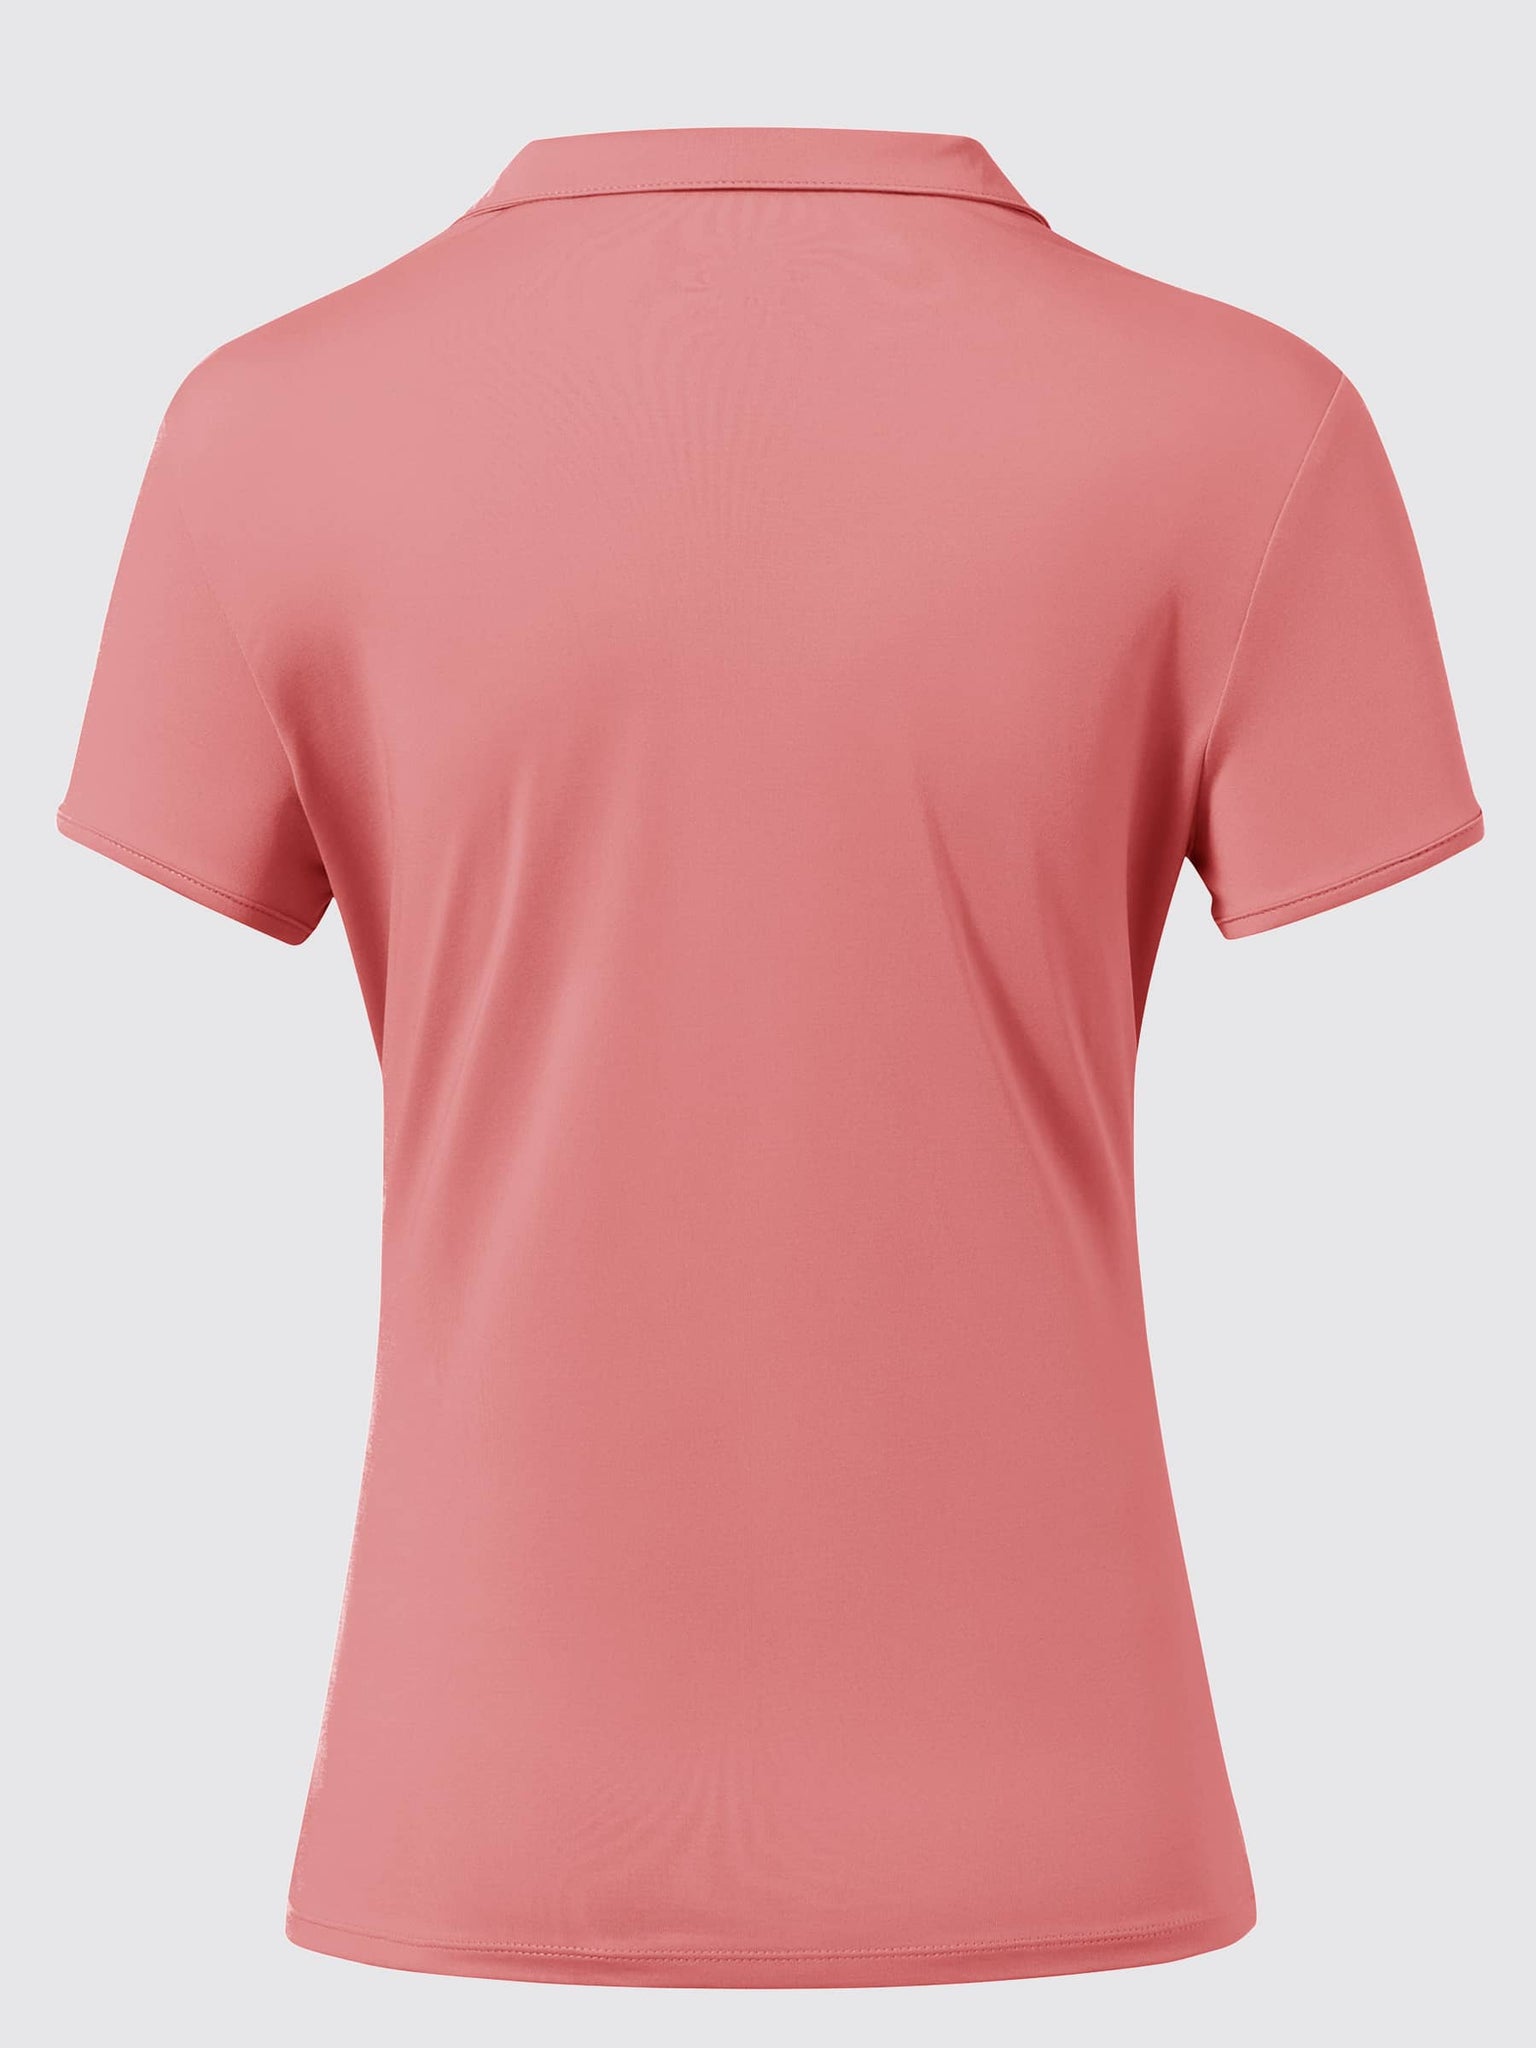 Willit Women's Golf Polo Short Sleeve Shirts_Salmon3